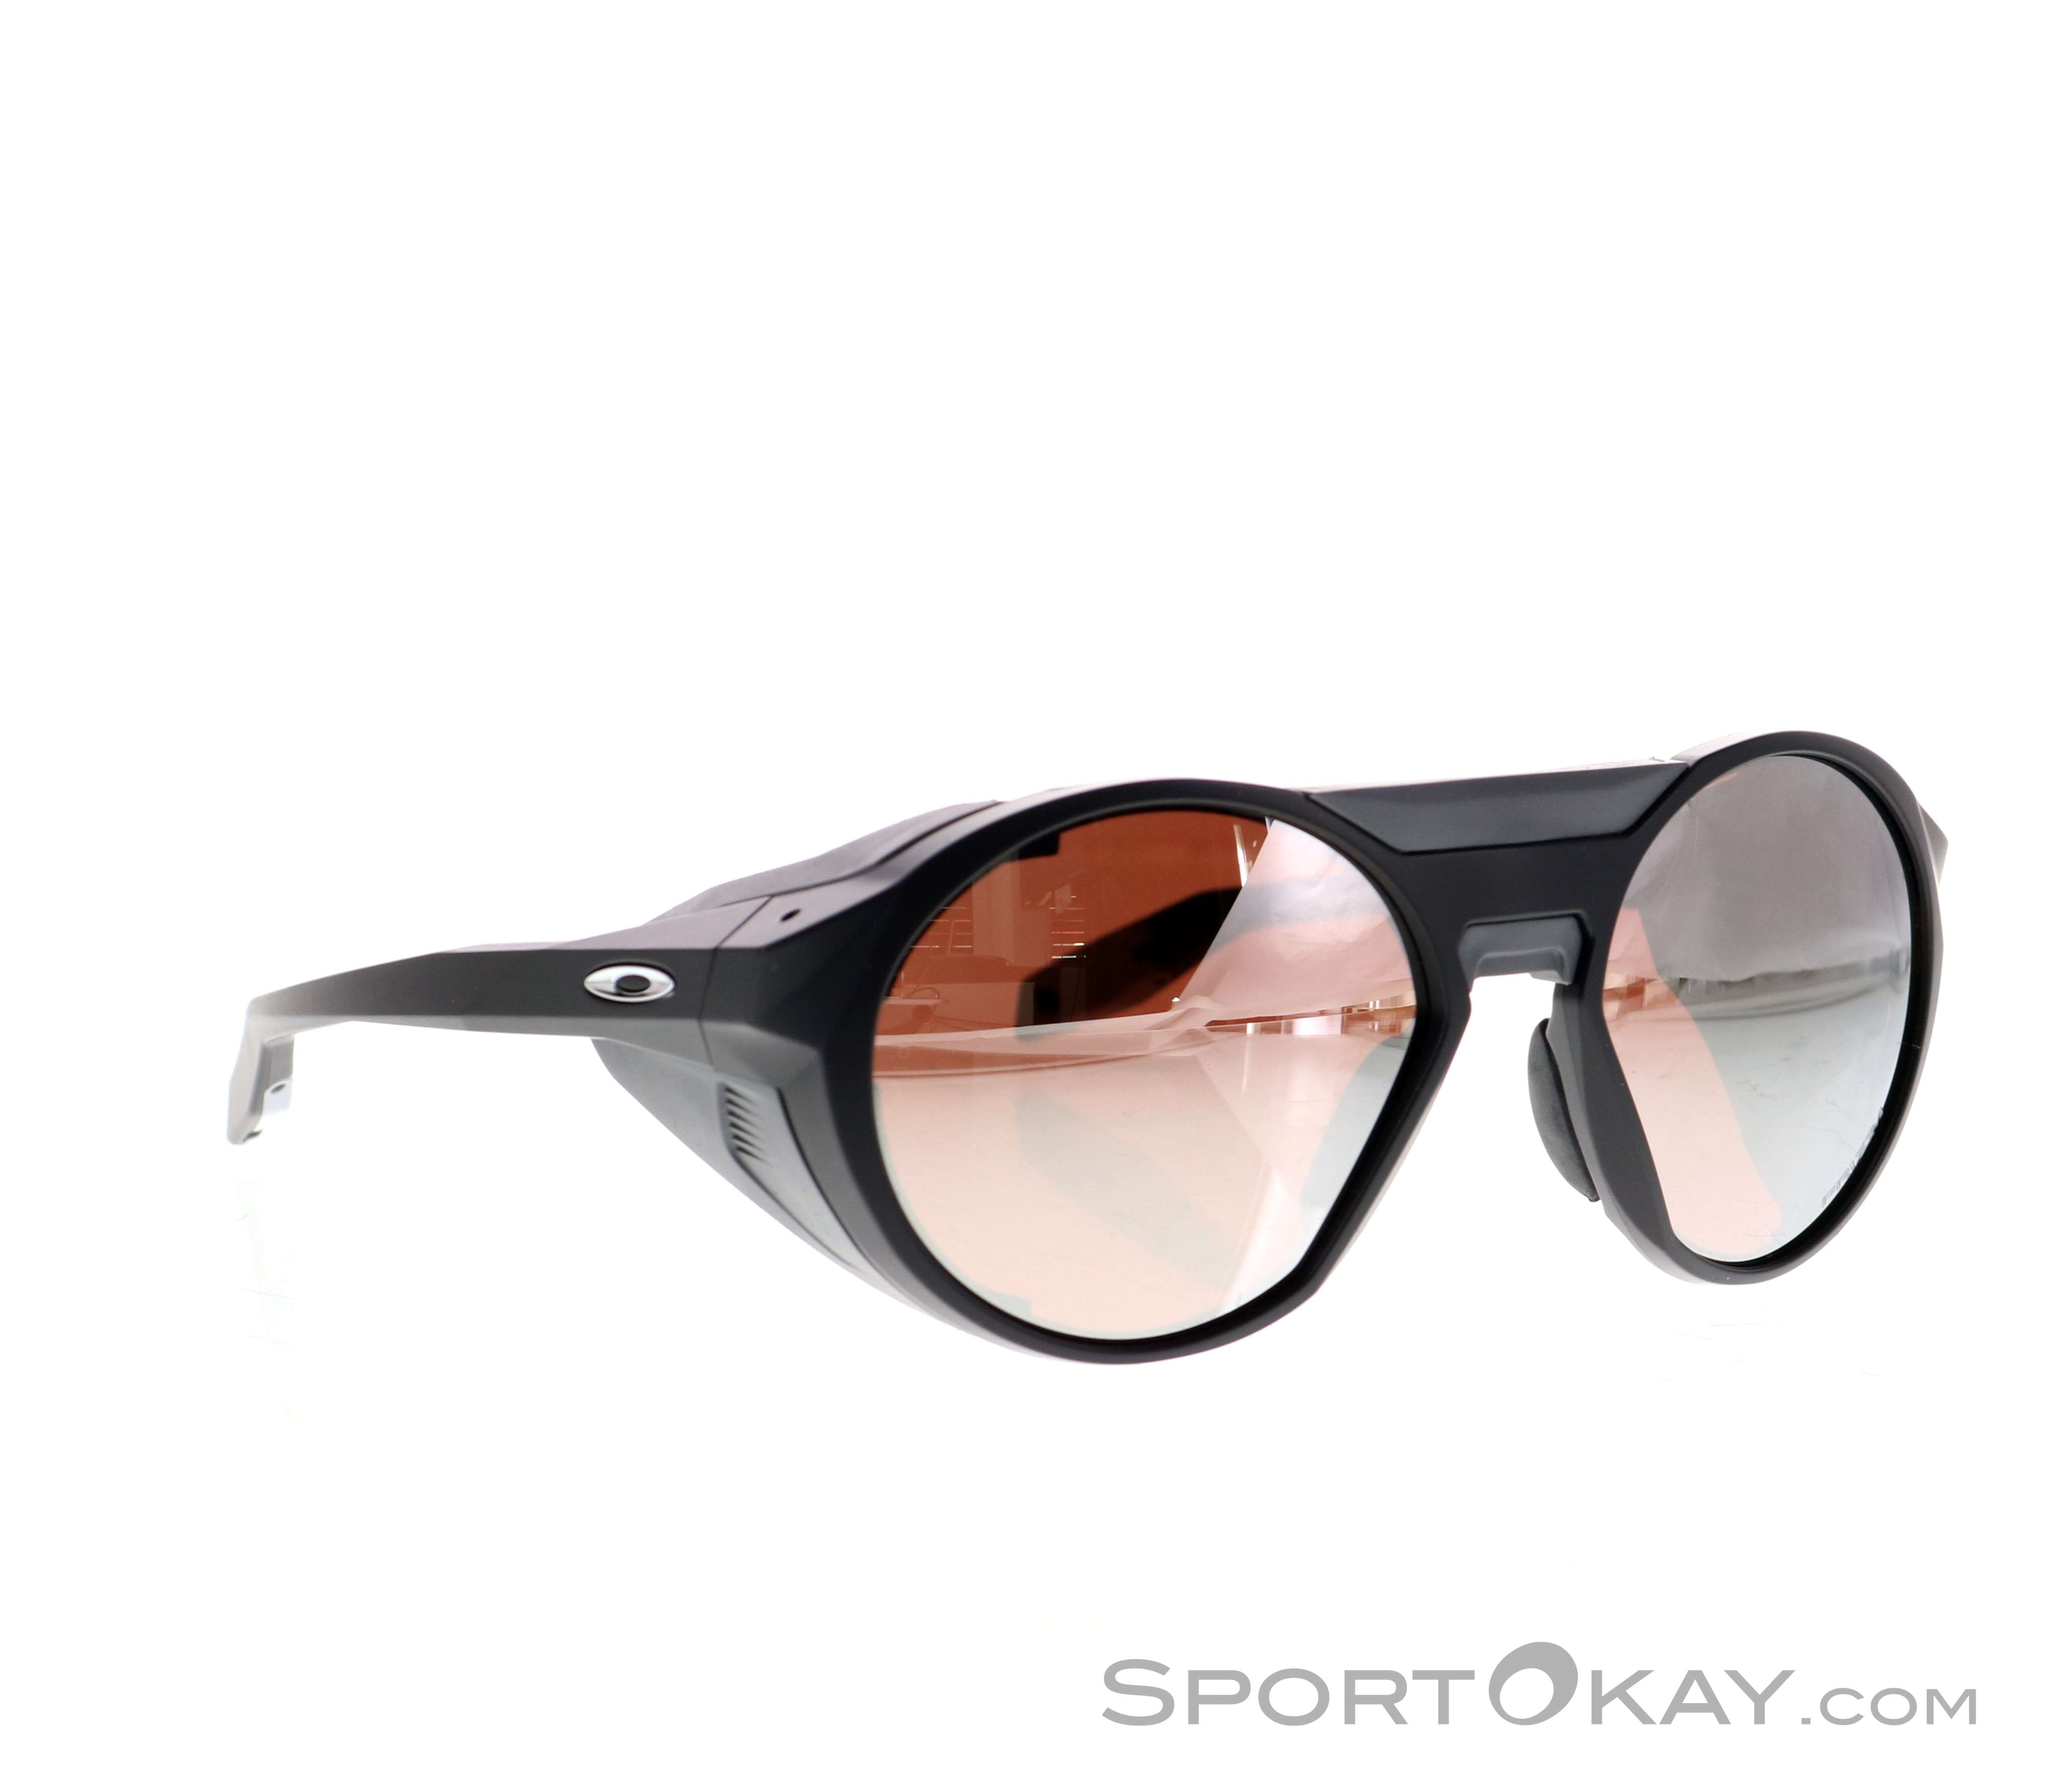 2 Pairs Hurricane Category-5 Water-Sport Interchangeable Sunglasses Black  Frame + Driving Mirror Lens White Frame + Polarized Smoke Lens - Walmart.com